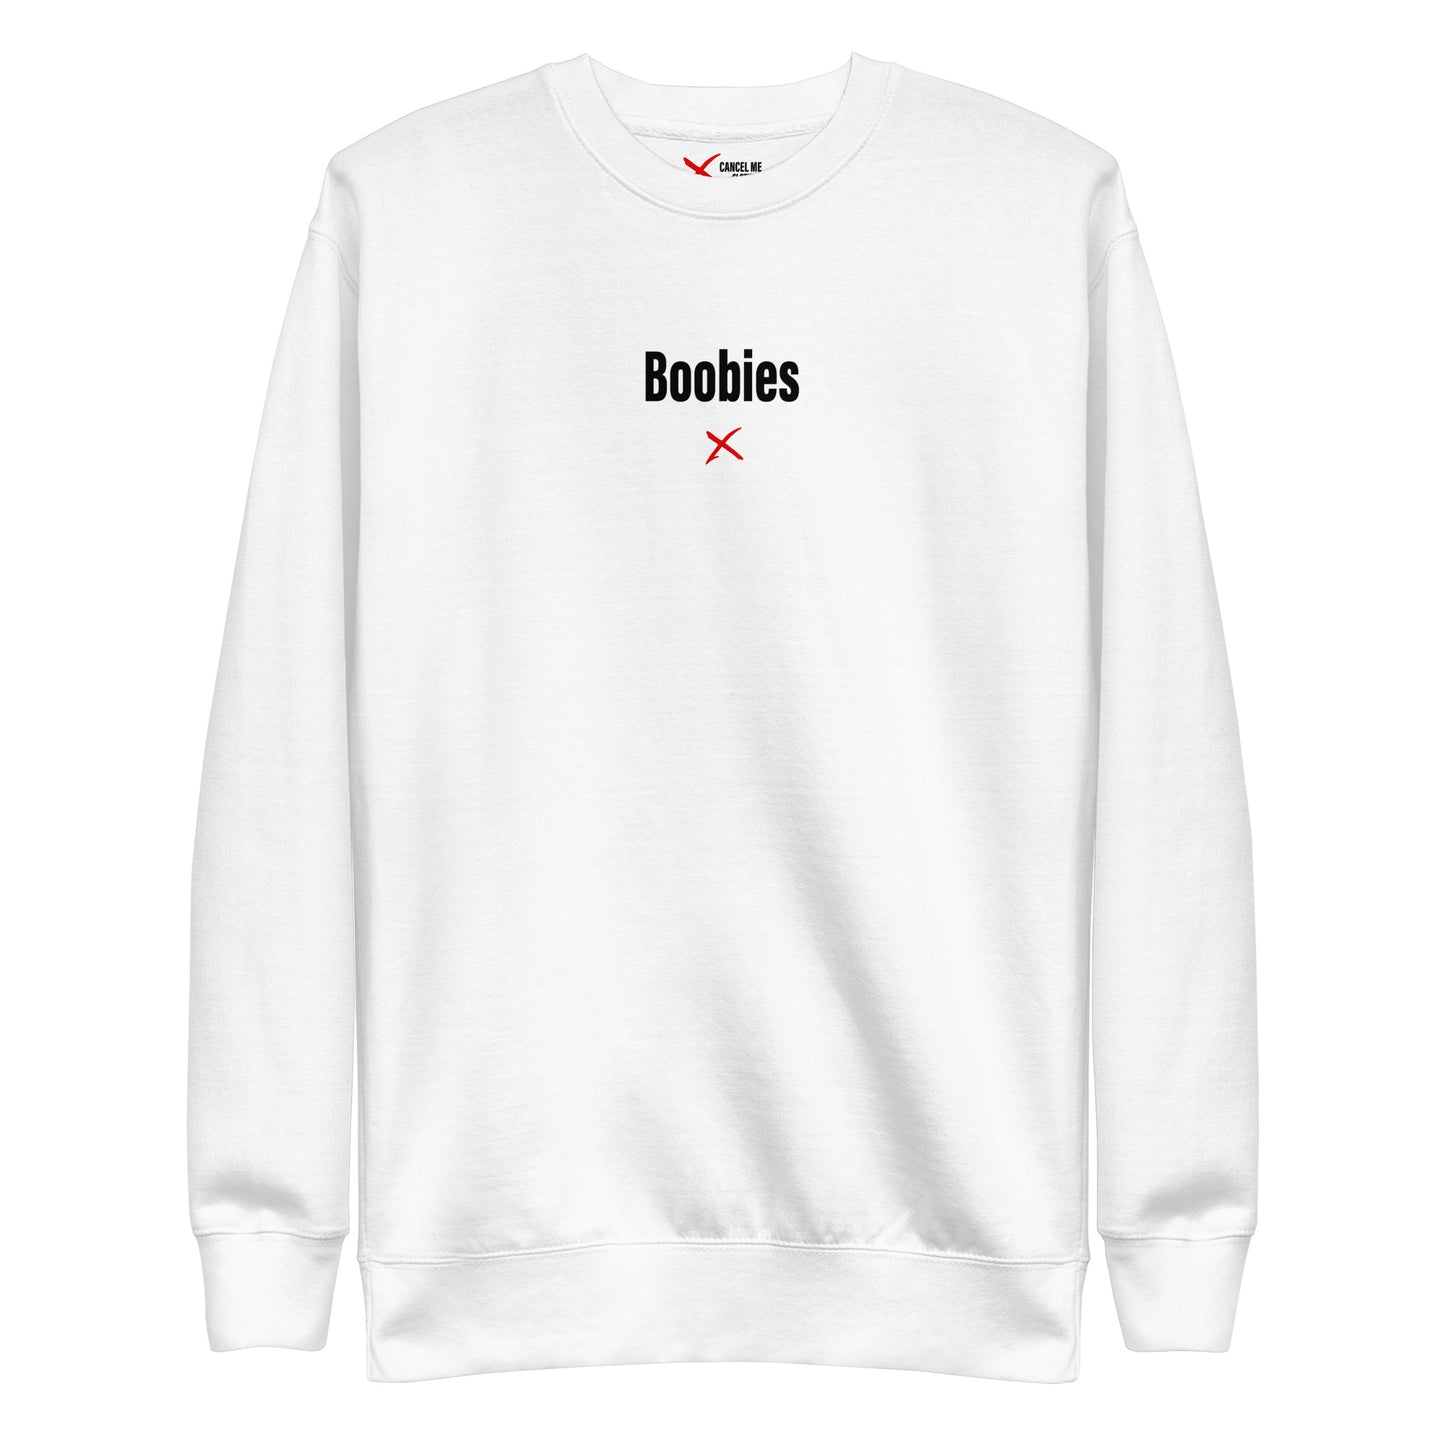 Boobies - Sweatshirt